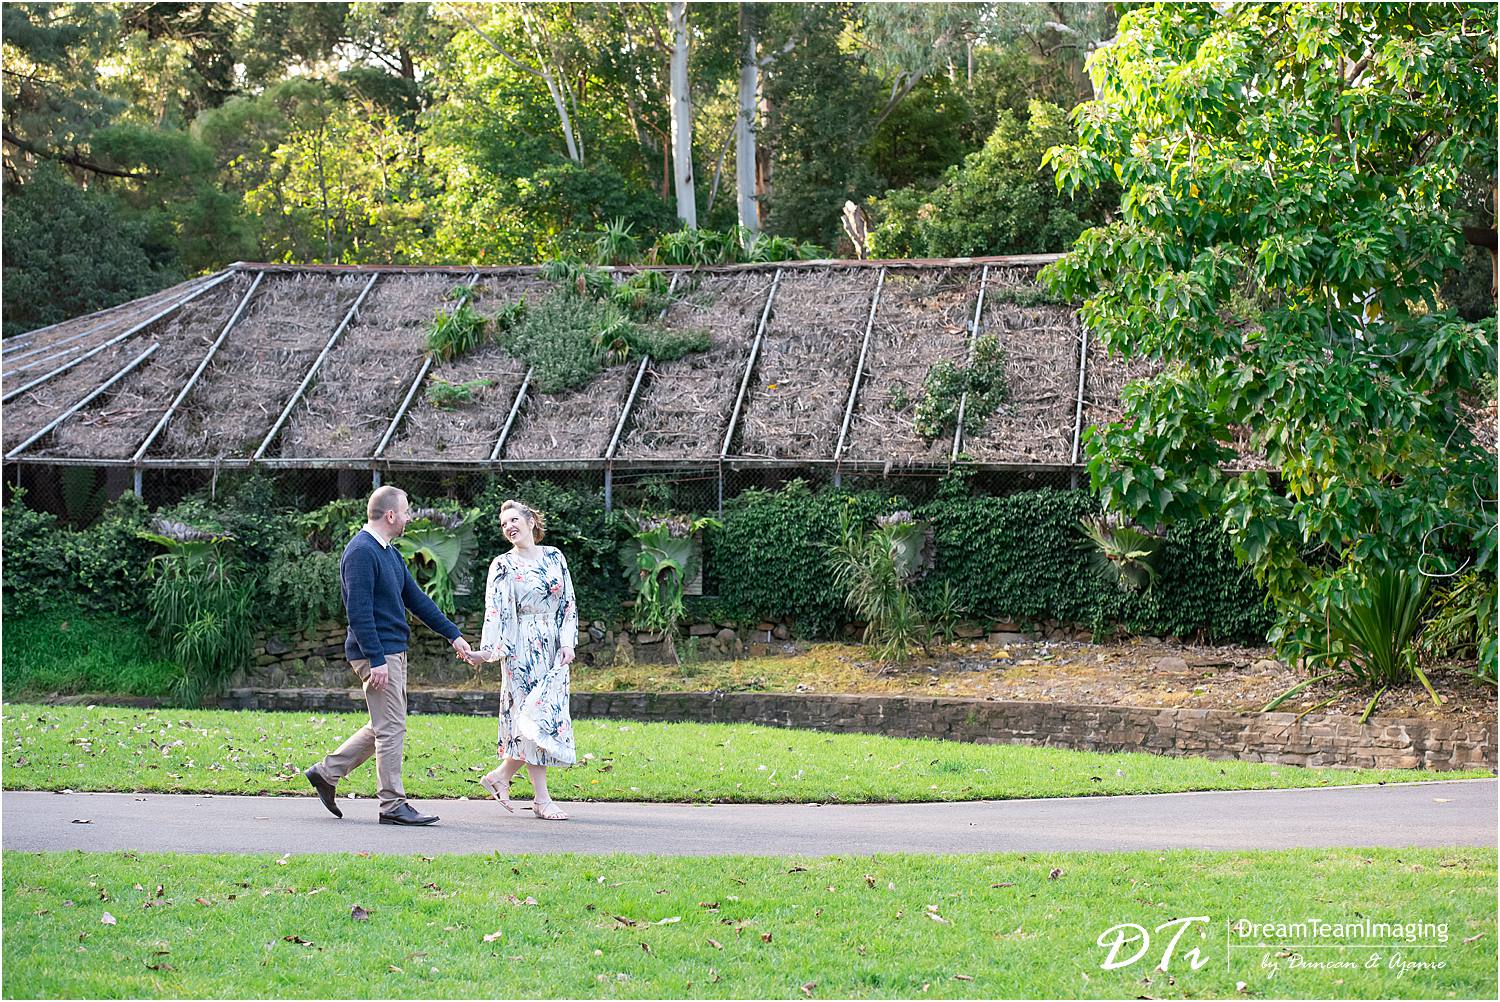 Couple engagement session at Botanic Gardens Adelaide, couple hugging and walking